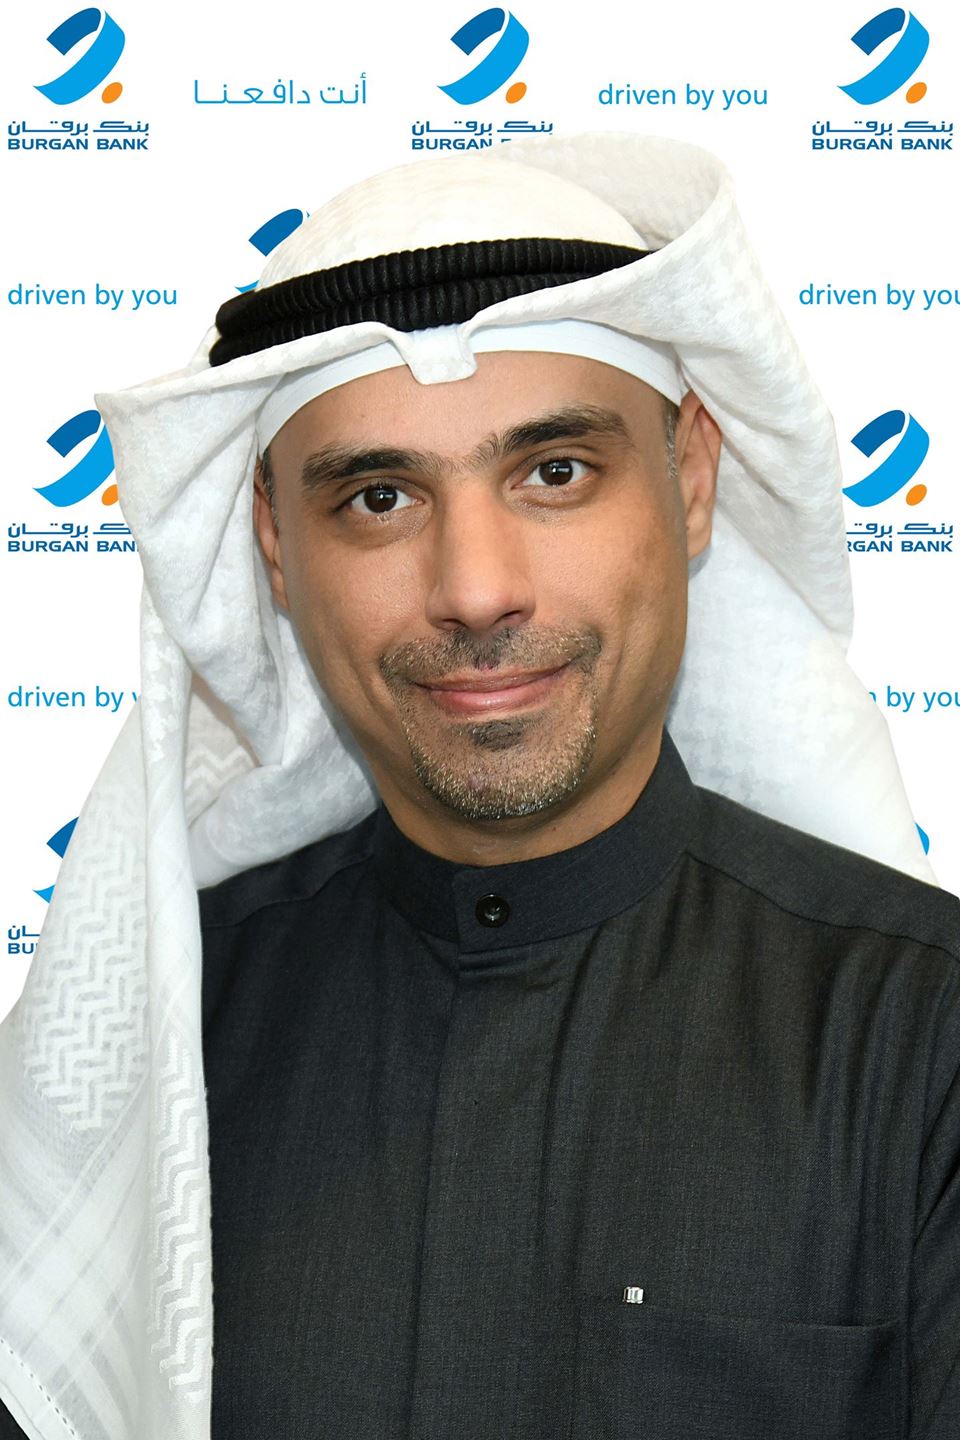 Mr. Manaf Al-Menaifi, Chief Strategic Planning and Monitoring Officer